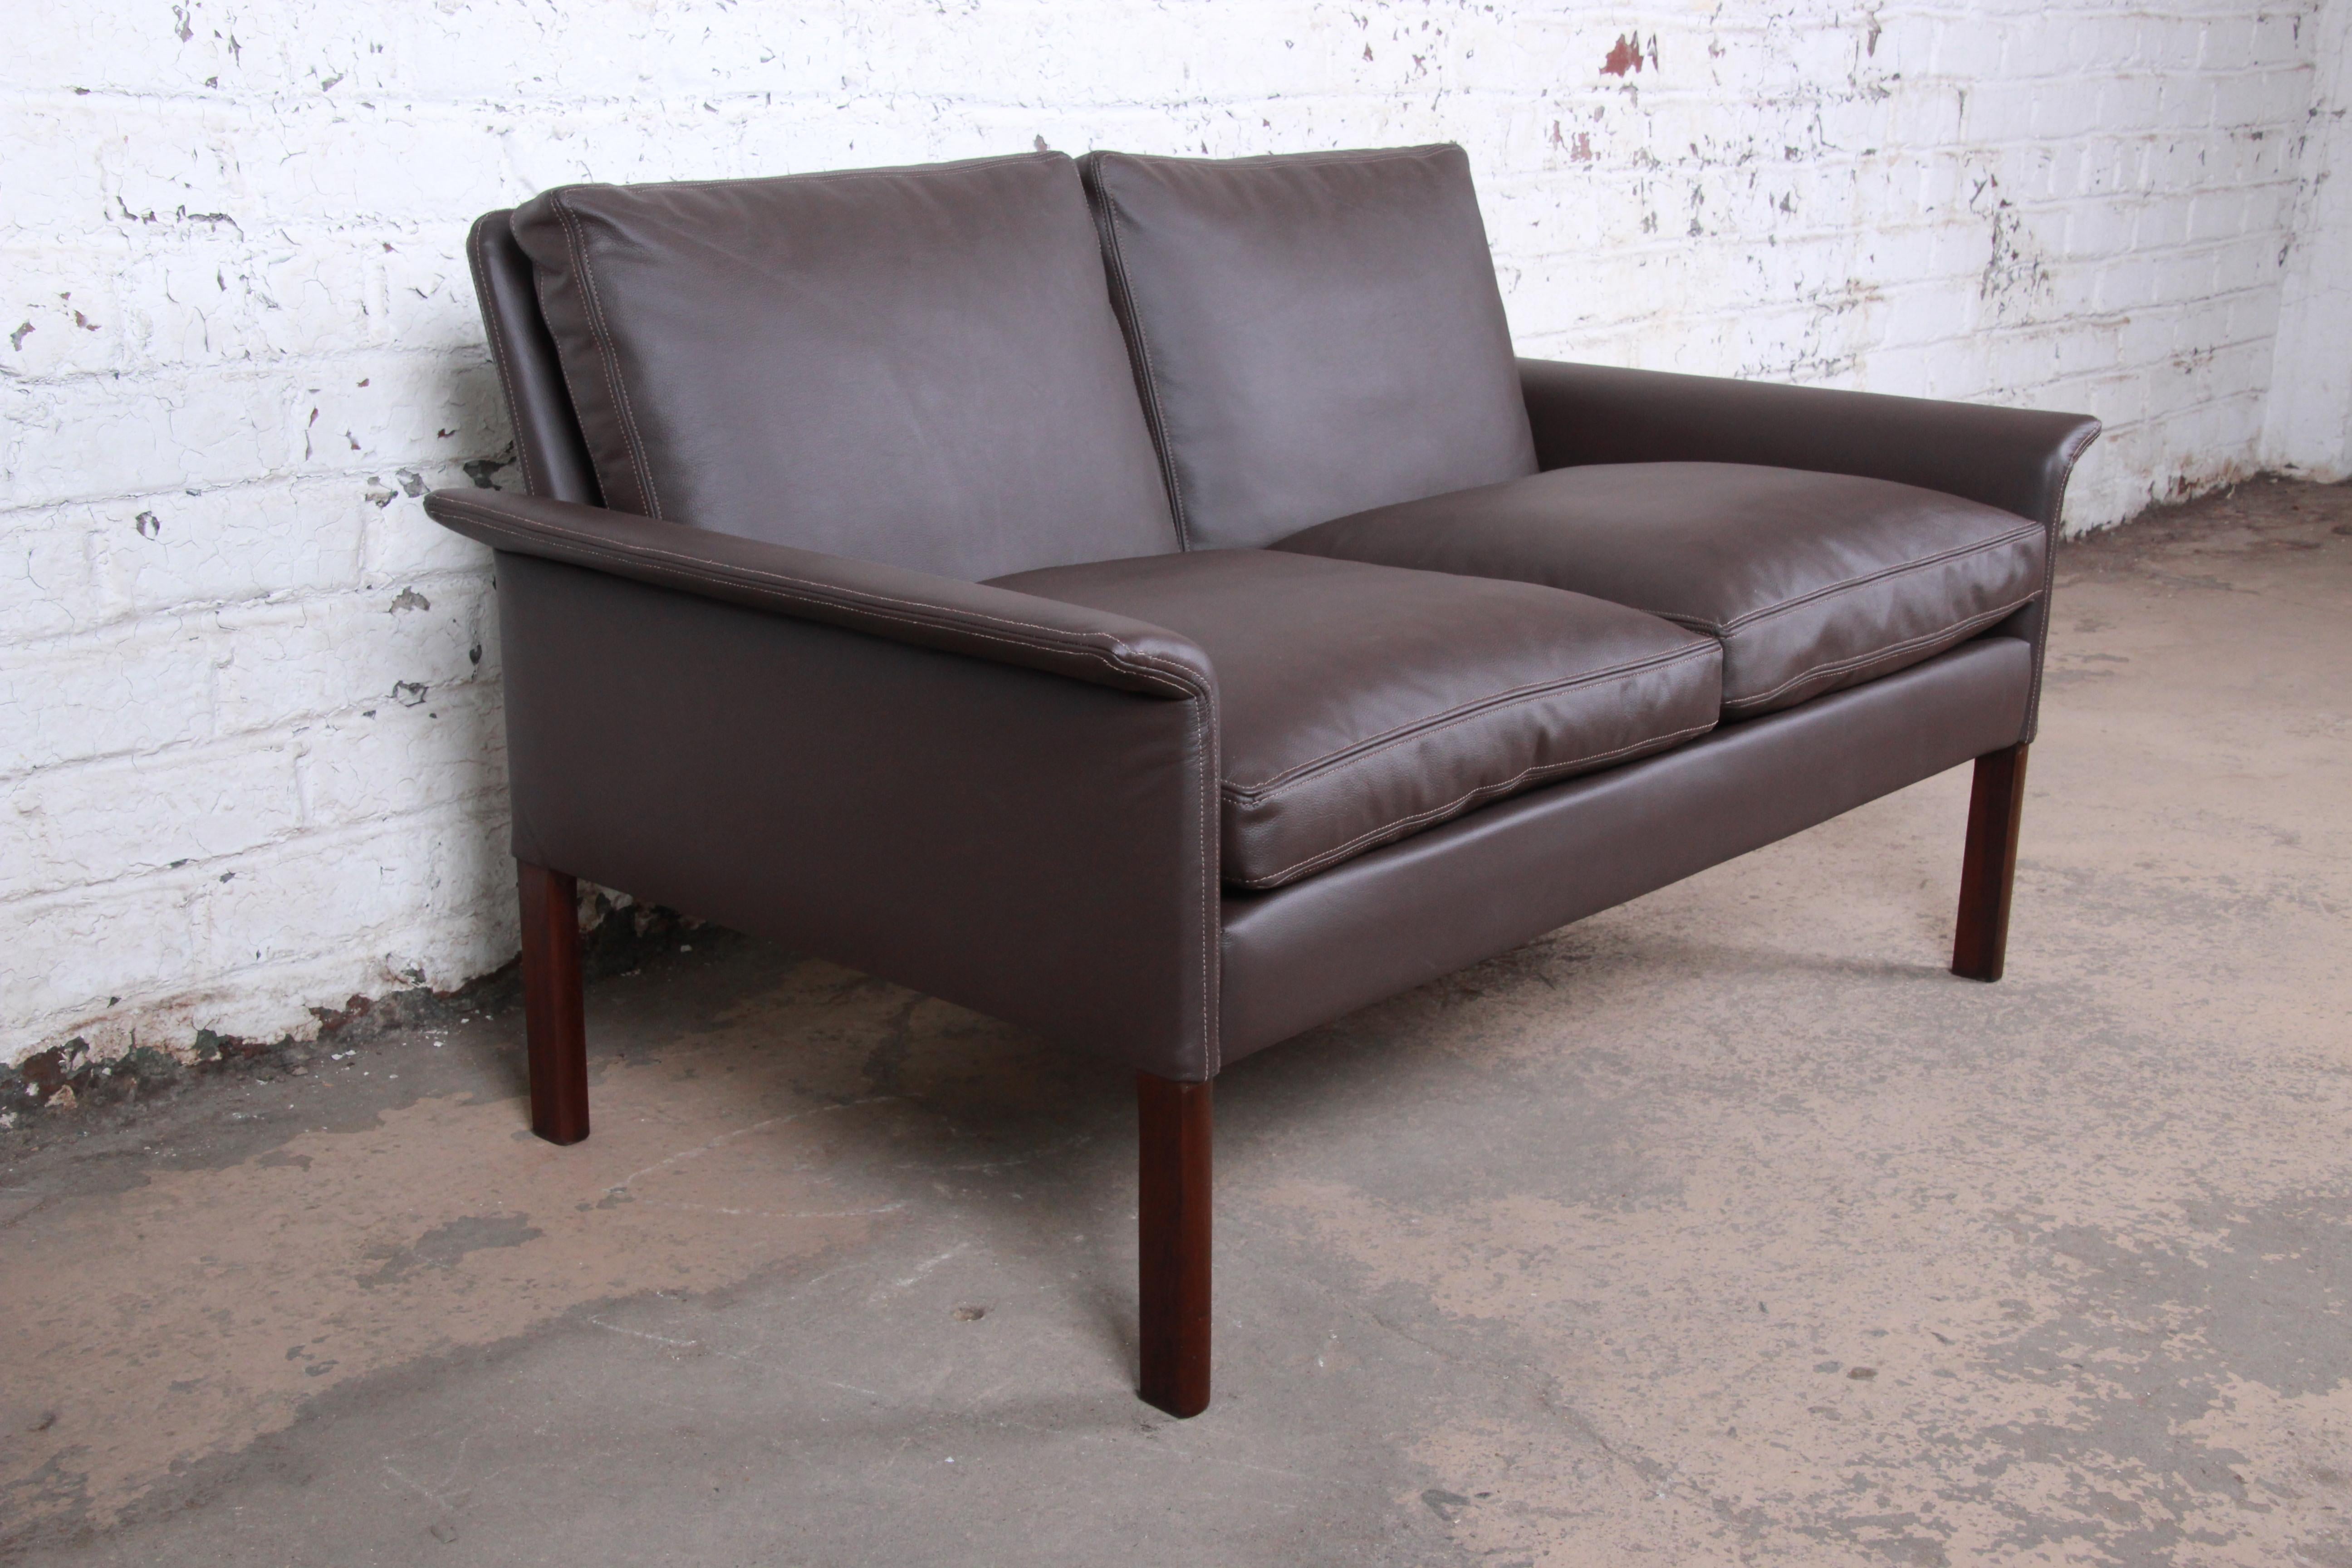 Hans Olsen Danish Modern Rosewood and Leather Settee, Fully Restored 1